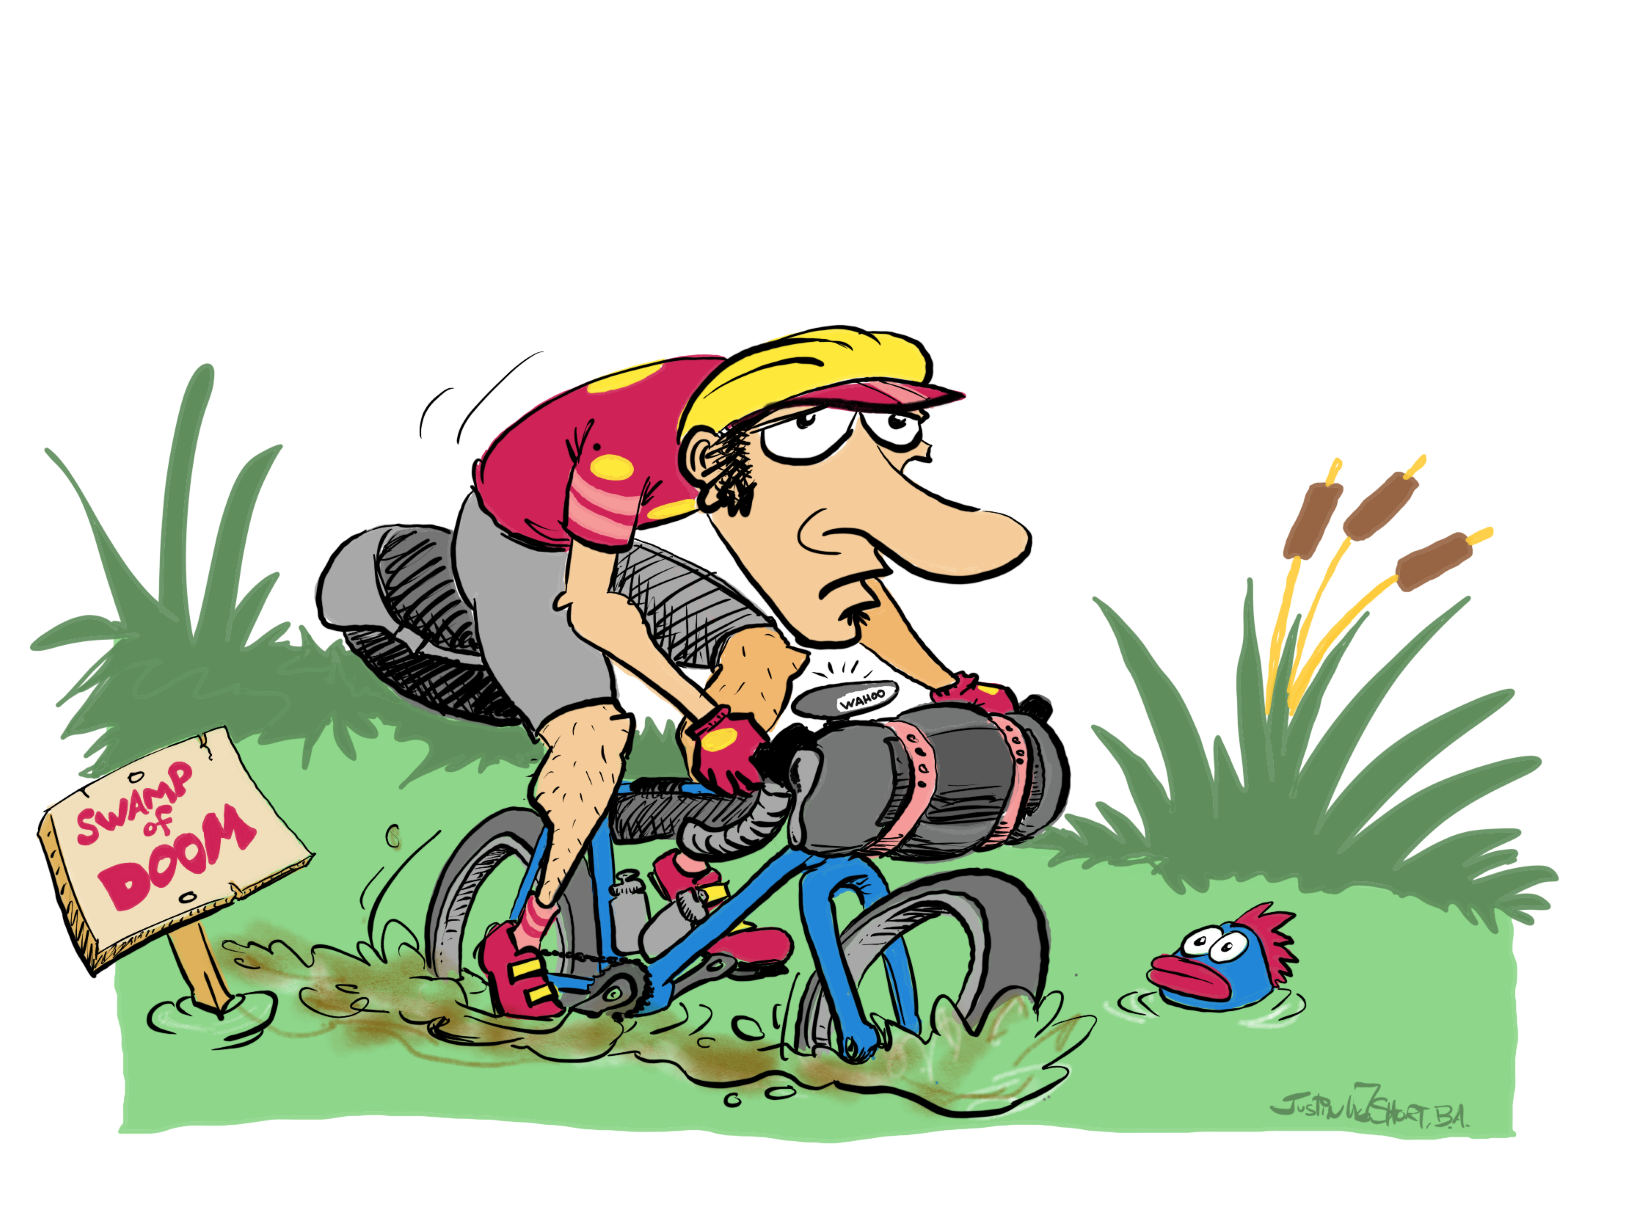 Swamp of doom bike riding illustration by Justin Short.